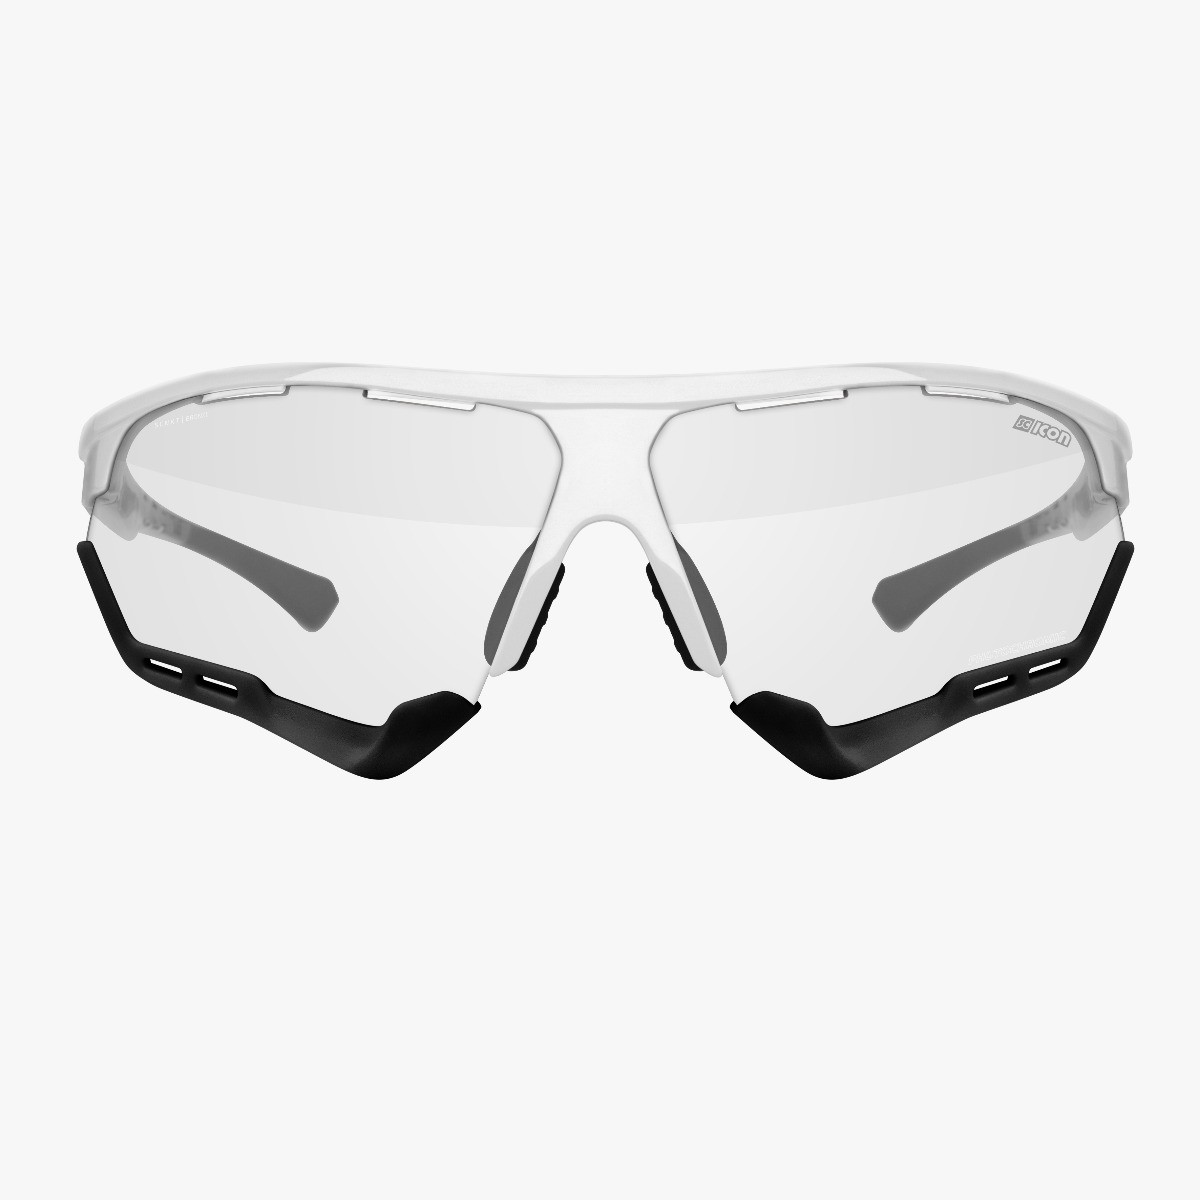 Aerocomfort cycling sunglasses scnxt photochromic white frame bronze lenses EY19170401
